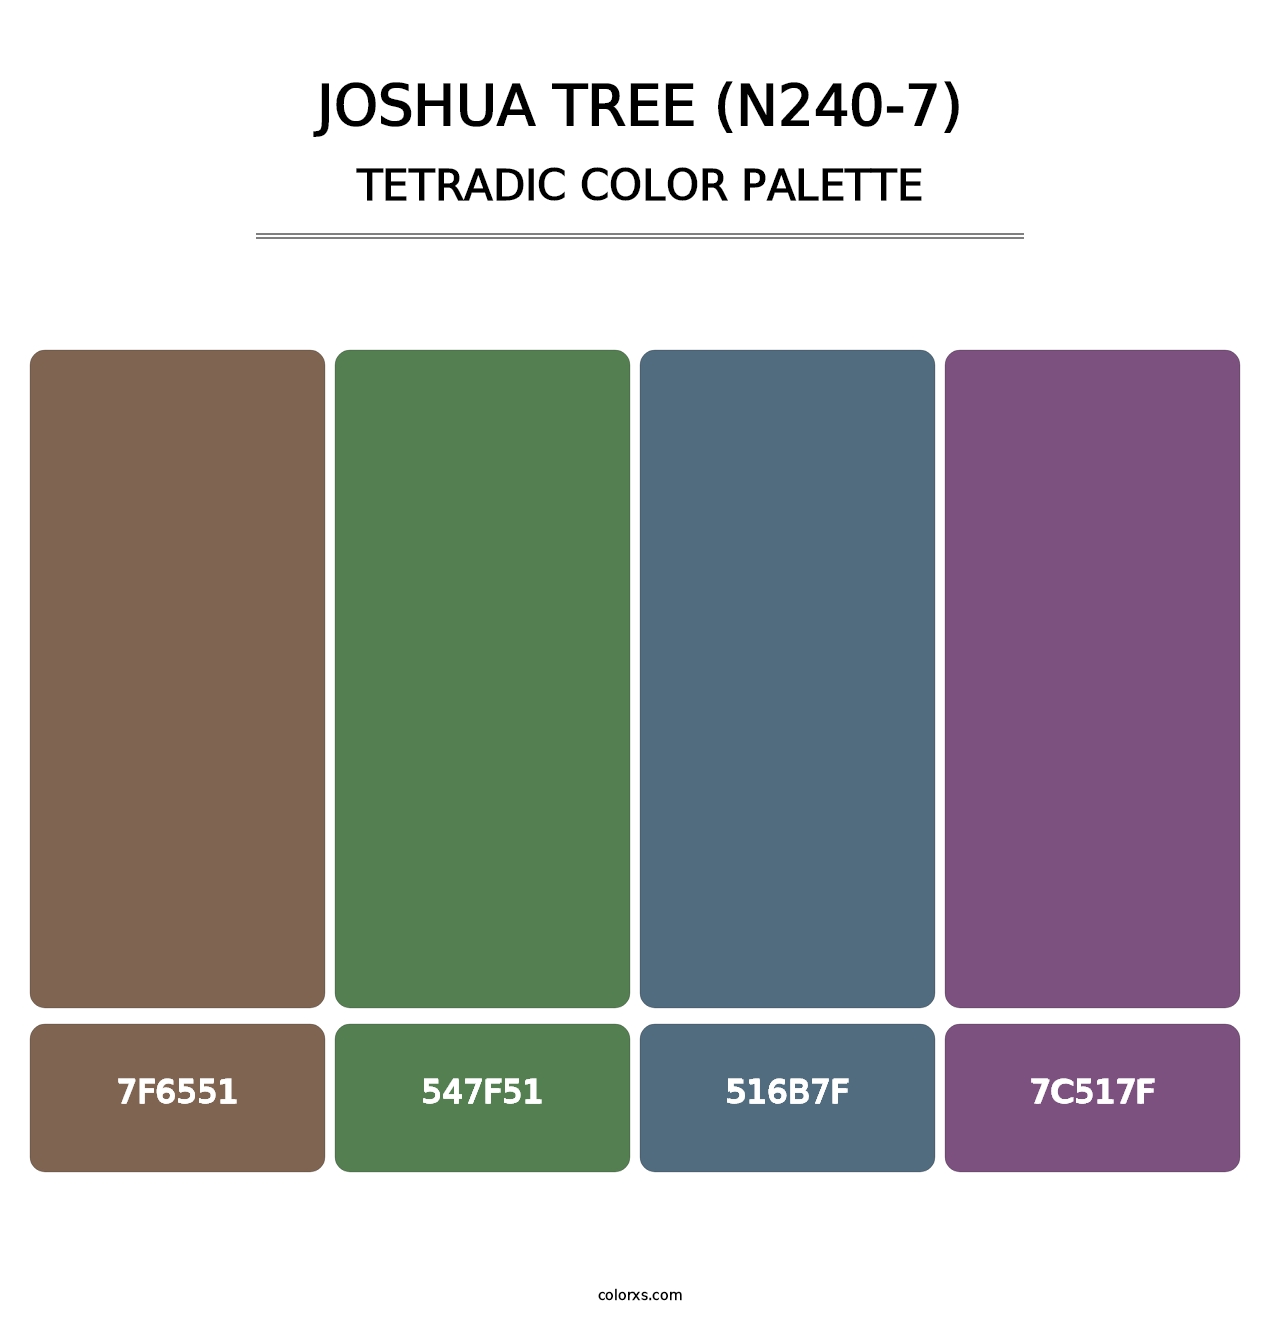 Joshua Tree (N240-7) - Tetradic Color Palette